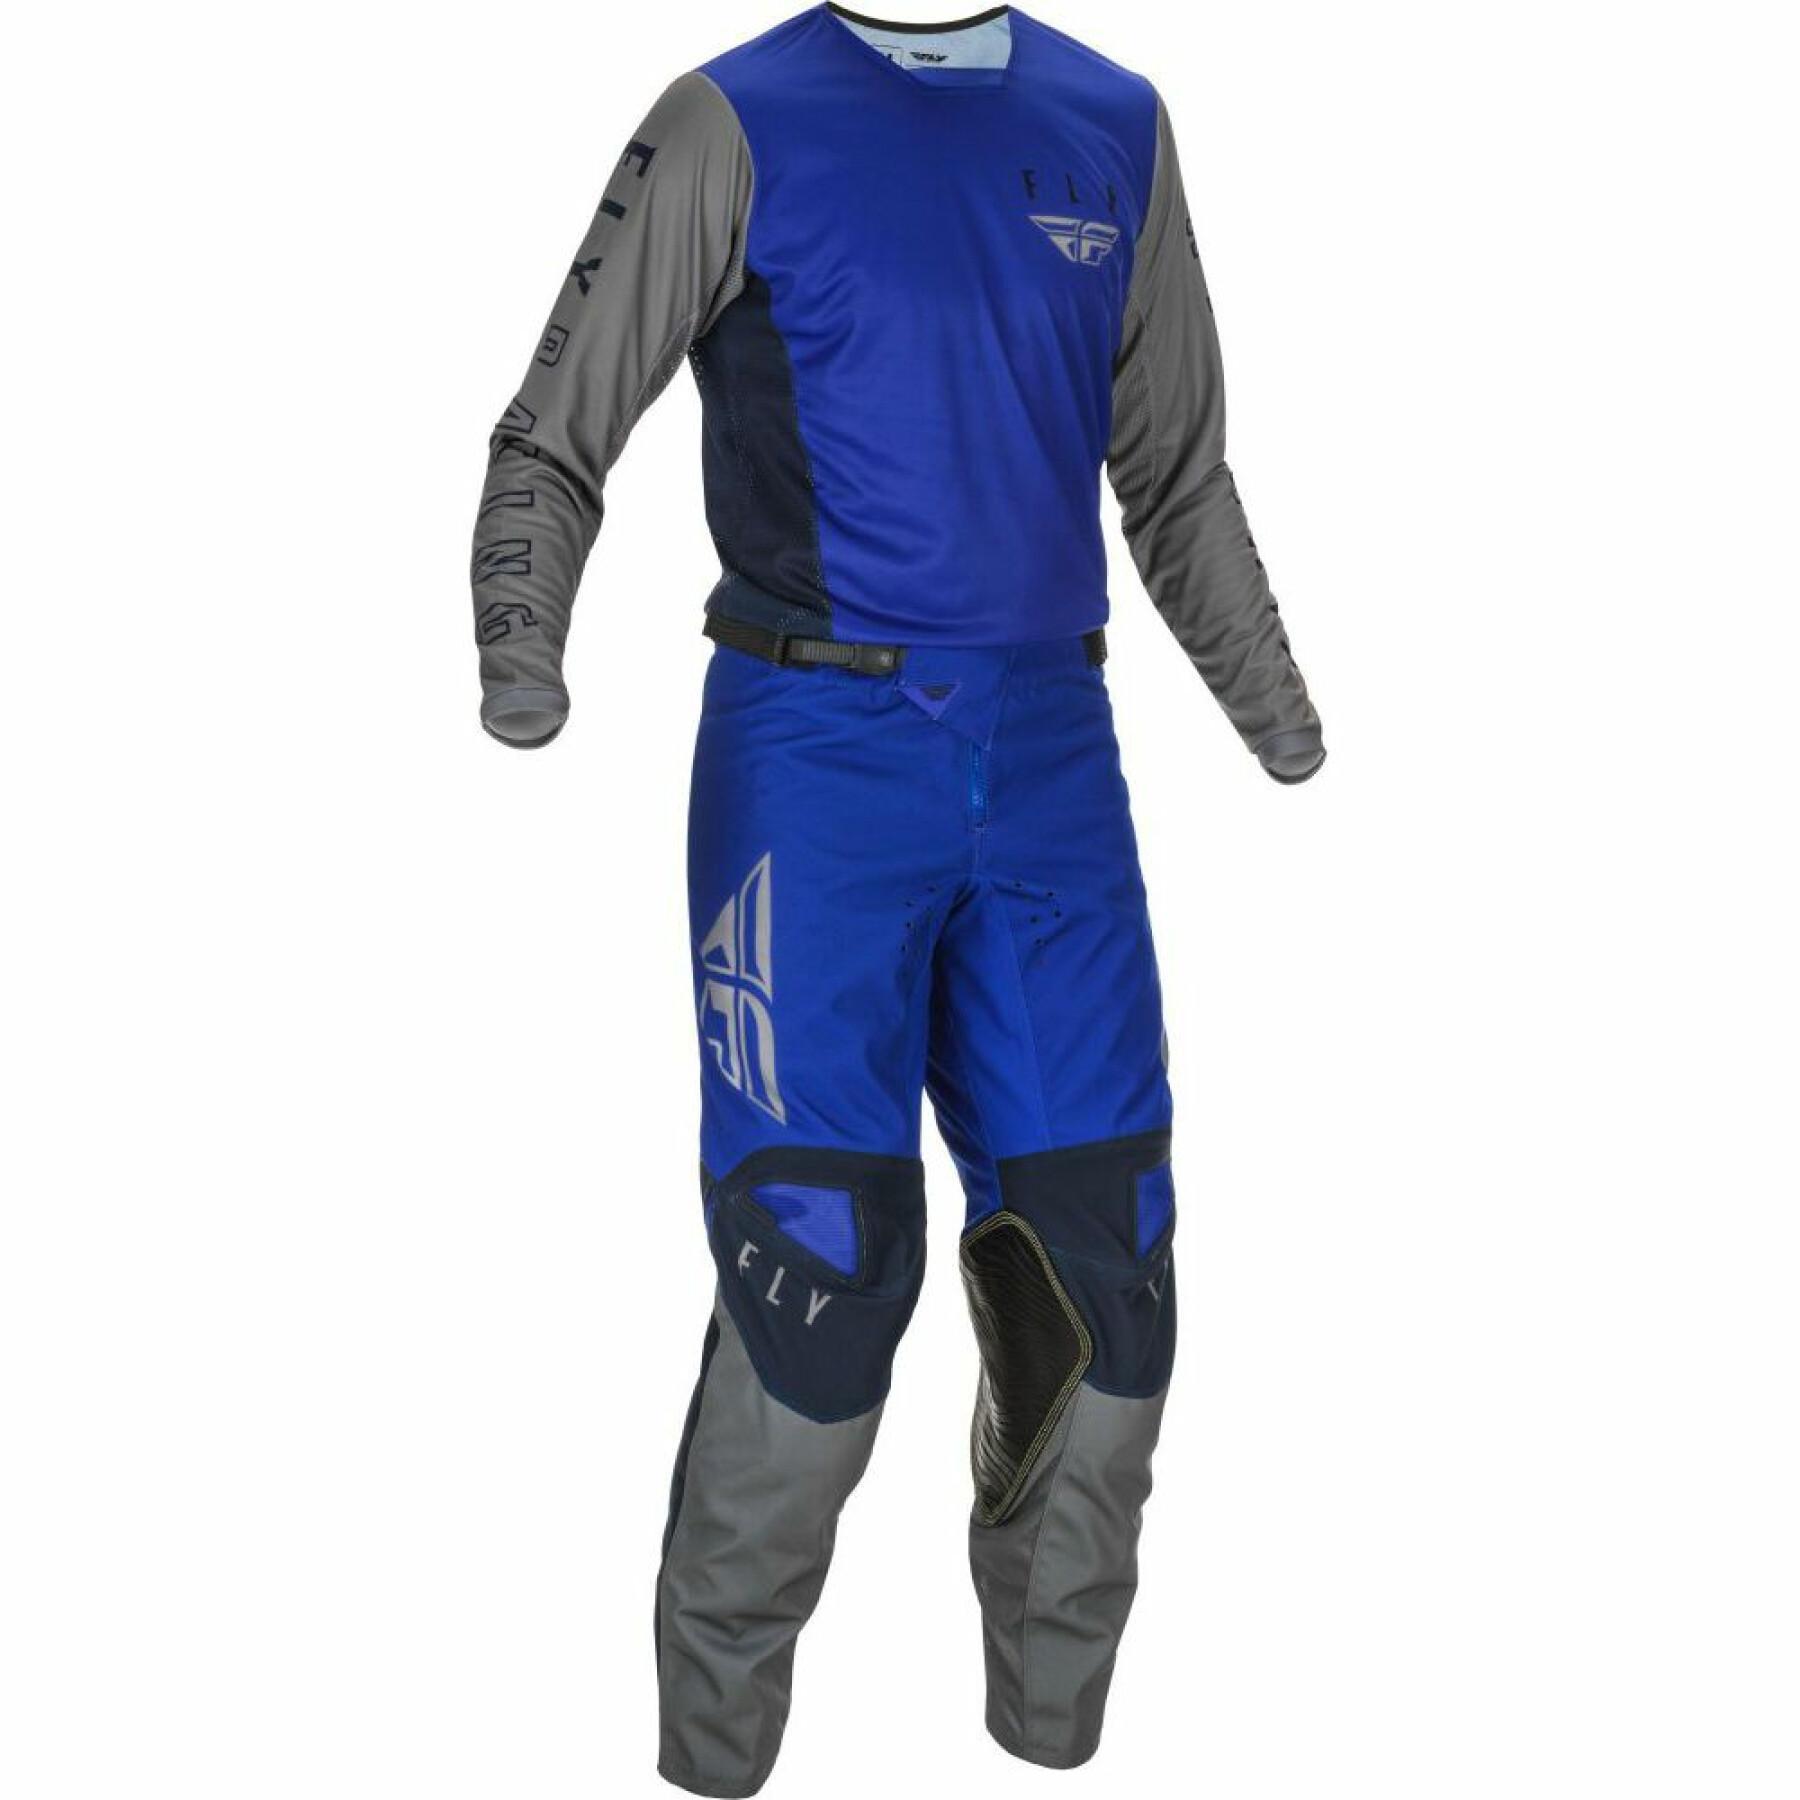 Pantalones para niños Fly Racing Kinetic K121 2021